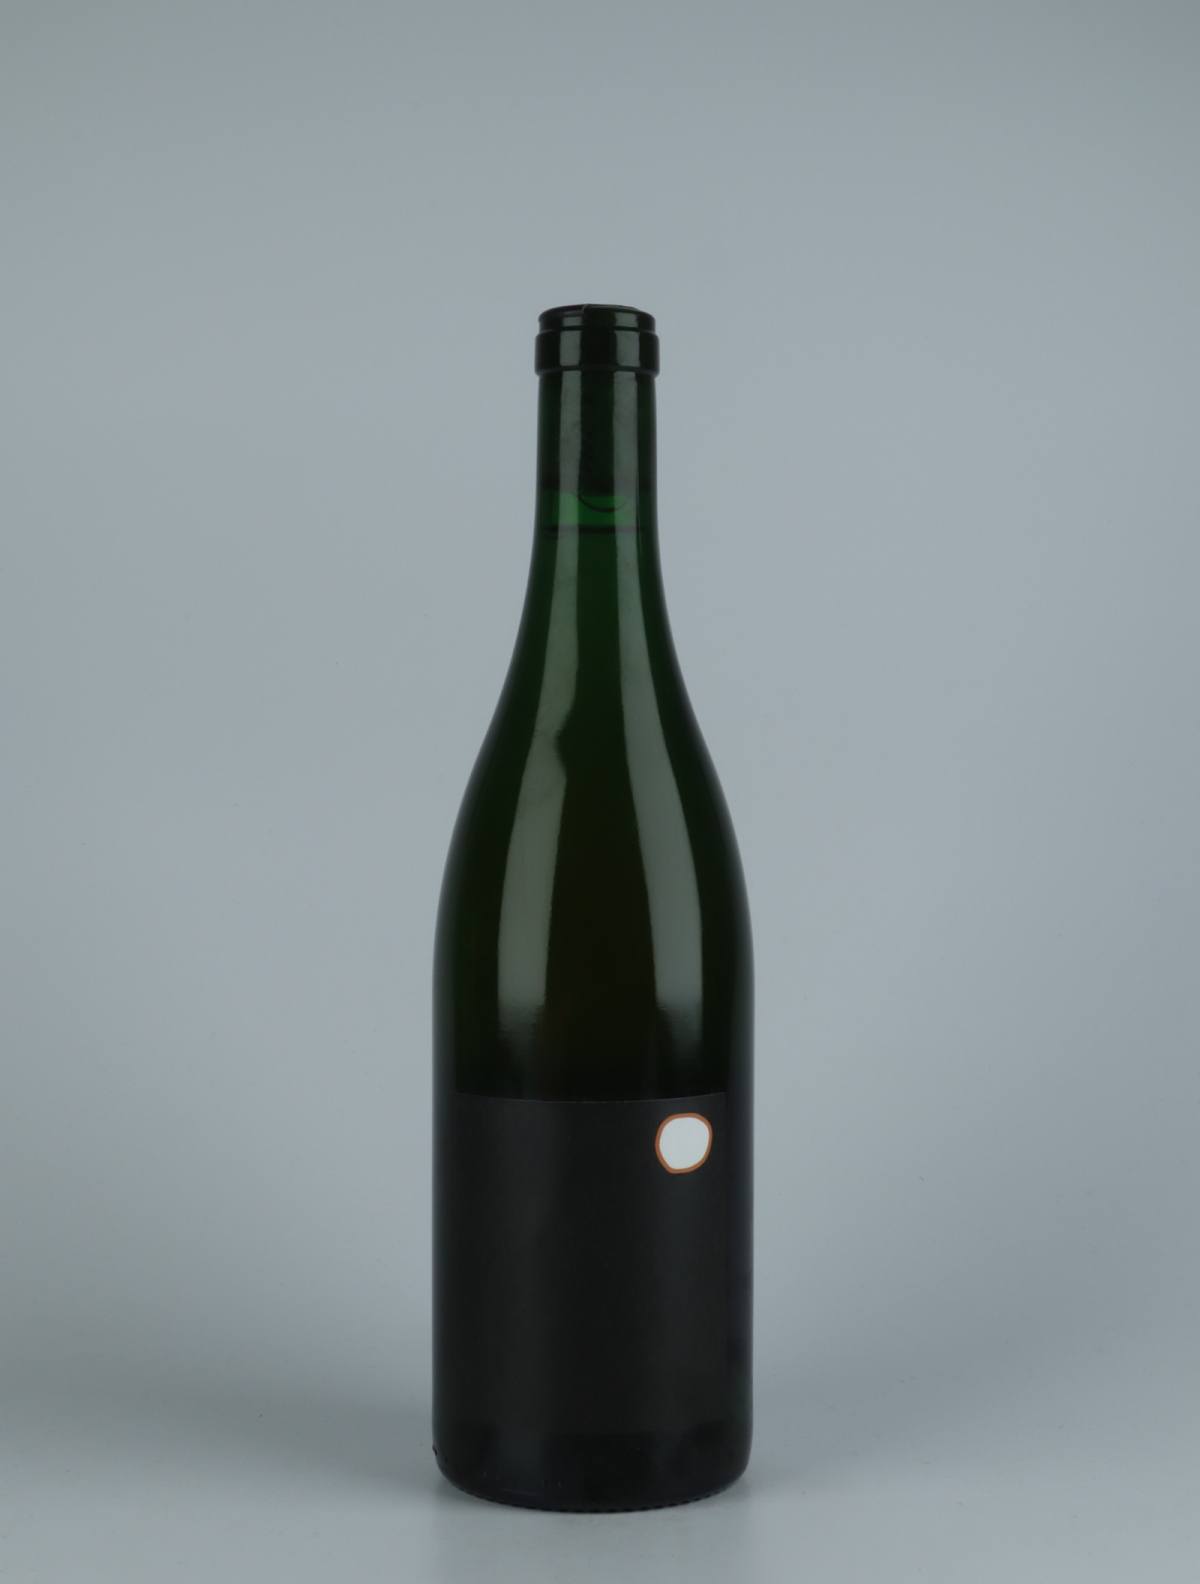 En flaske 2020 Chardonnay Maceration - Anonyme Orange vin fra Romuald Valot, Beaujolais i Frankrig